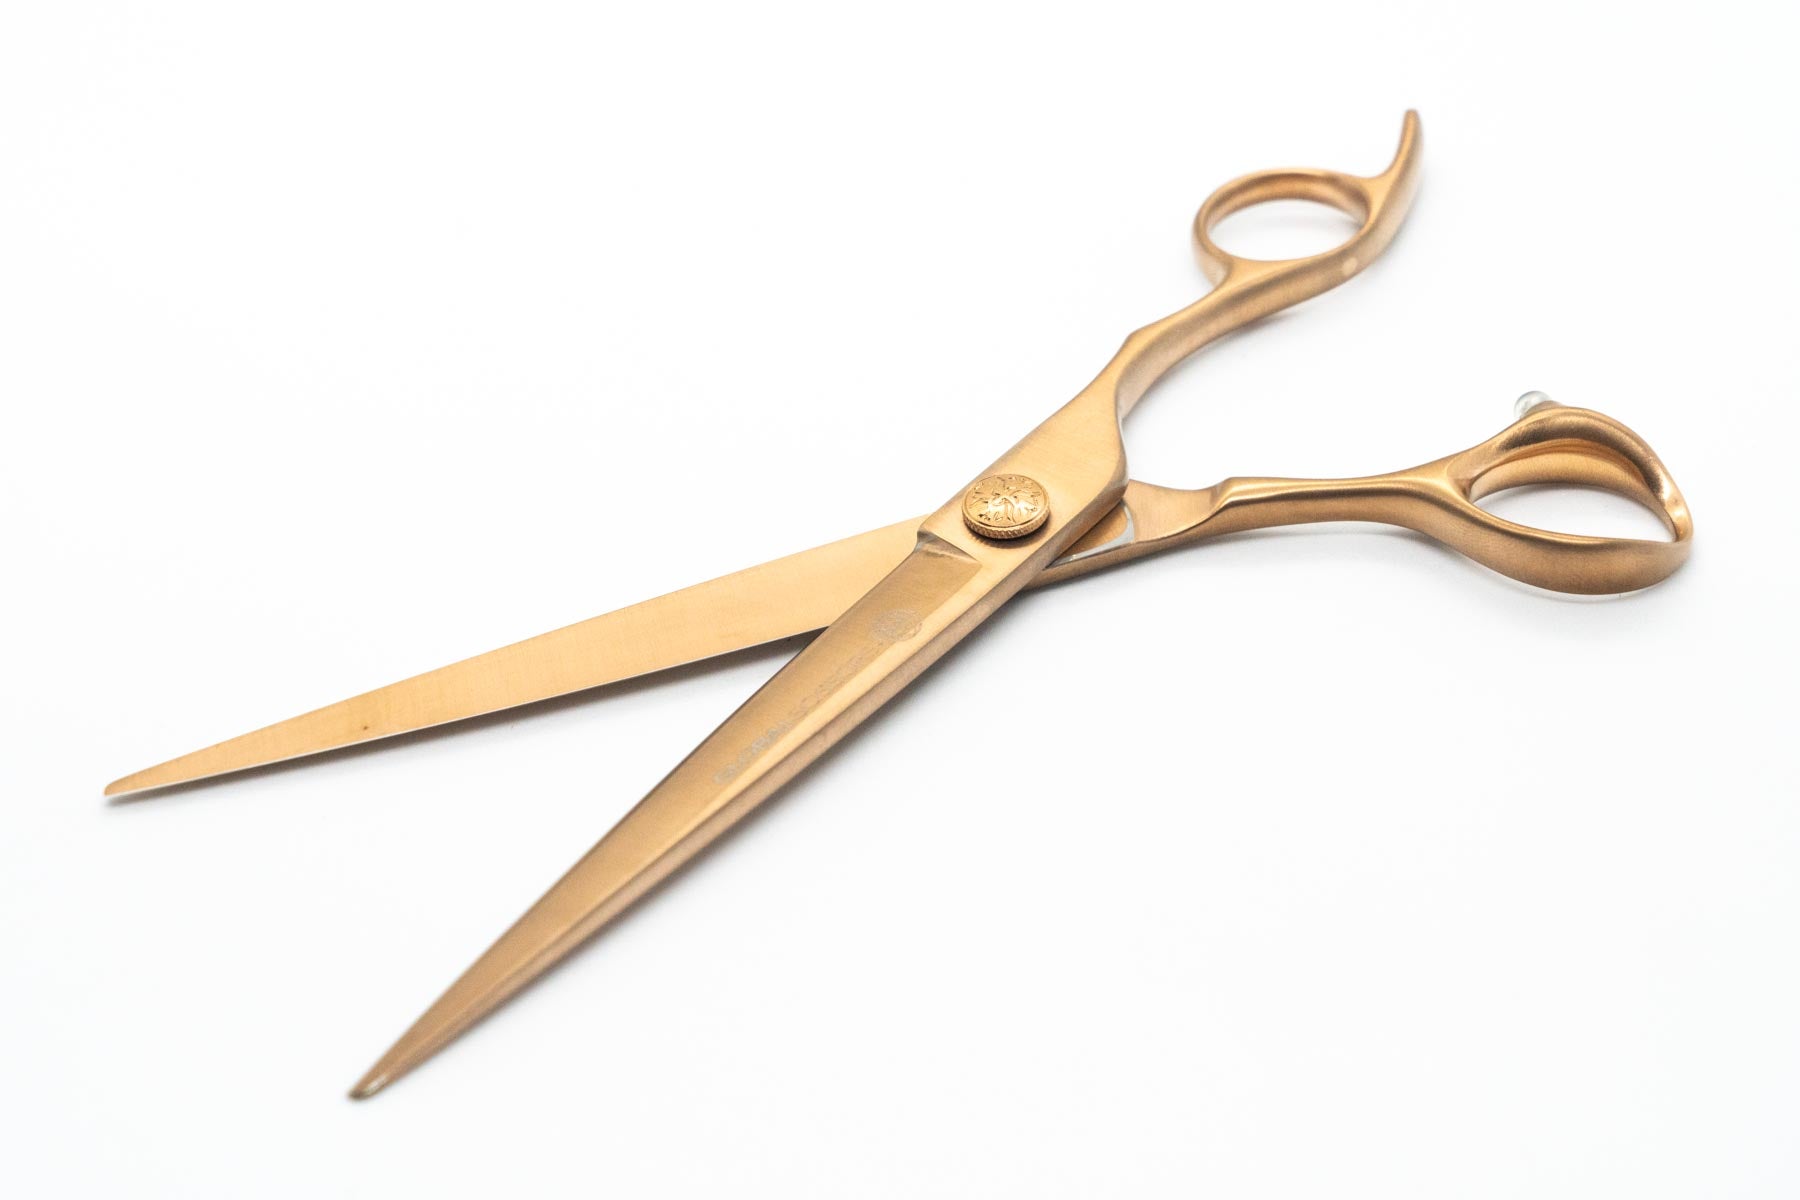 Aspen Lt Rose Gold Pet Grooming 7.5 inch Cutting Scissor